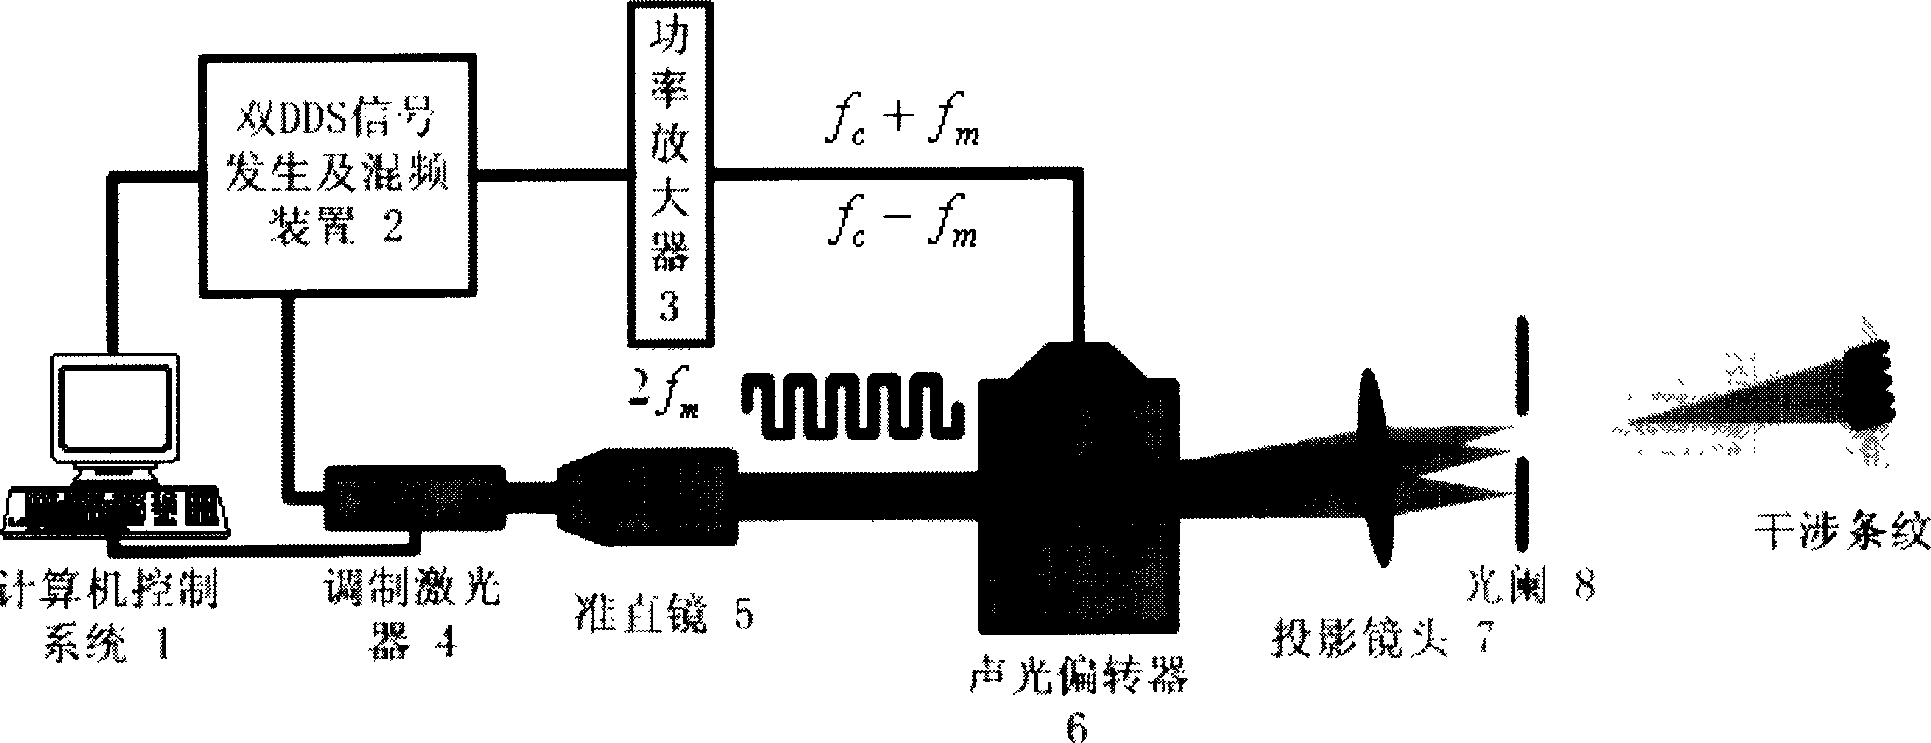 Sinusoidal fringe structural optical projector based on acousto-optic deflection device